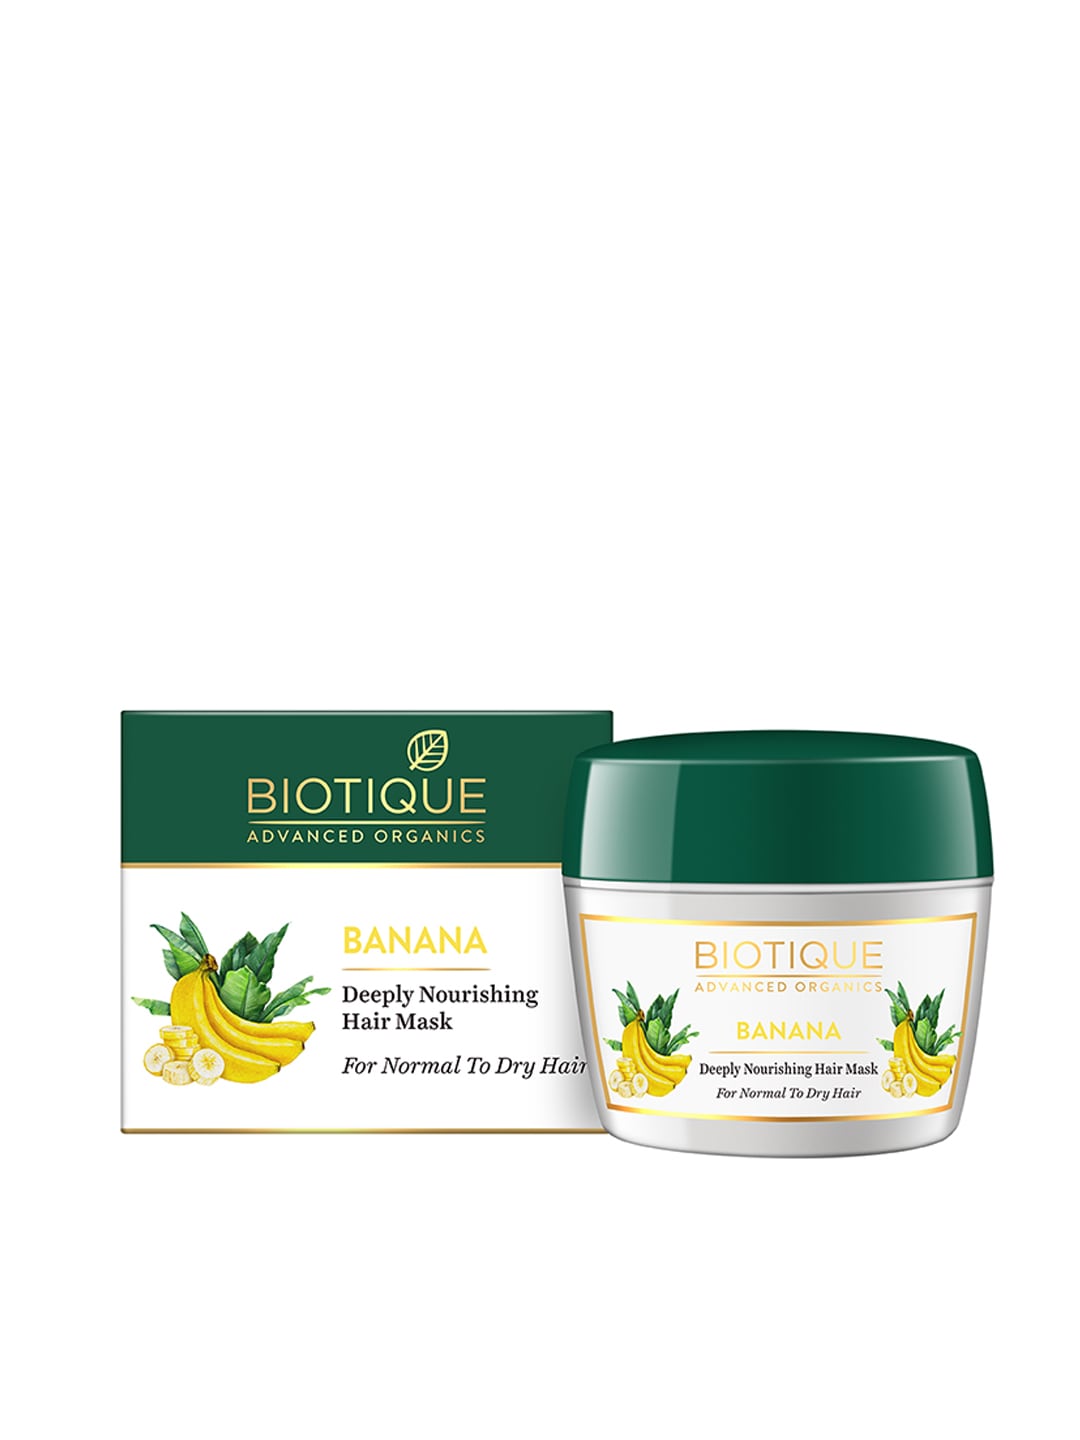 Biotique Unisex Advanced Organics Banana Deeply Nourishing Hair Mask 175 g Price in India